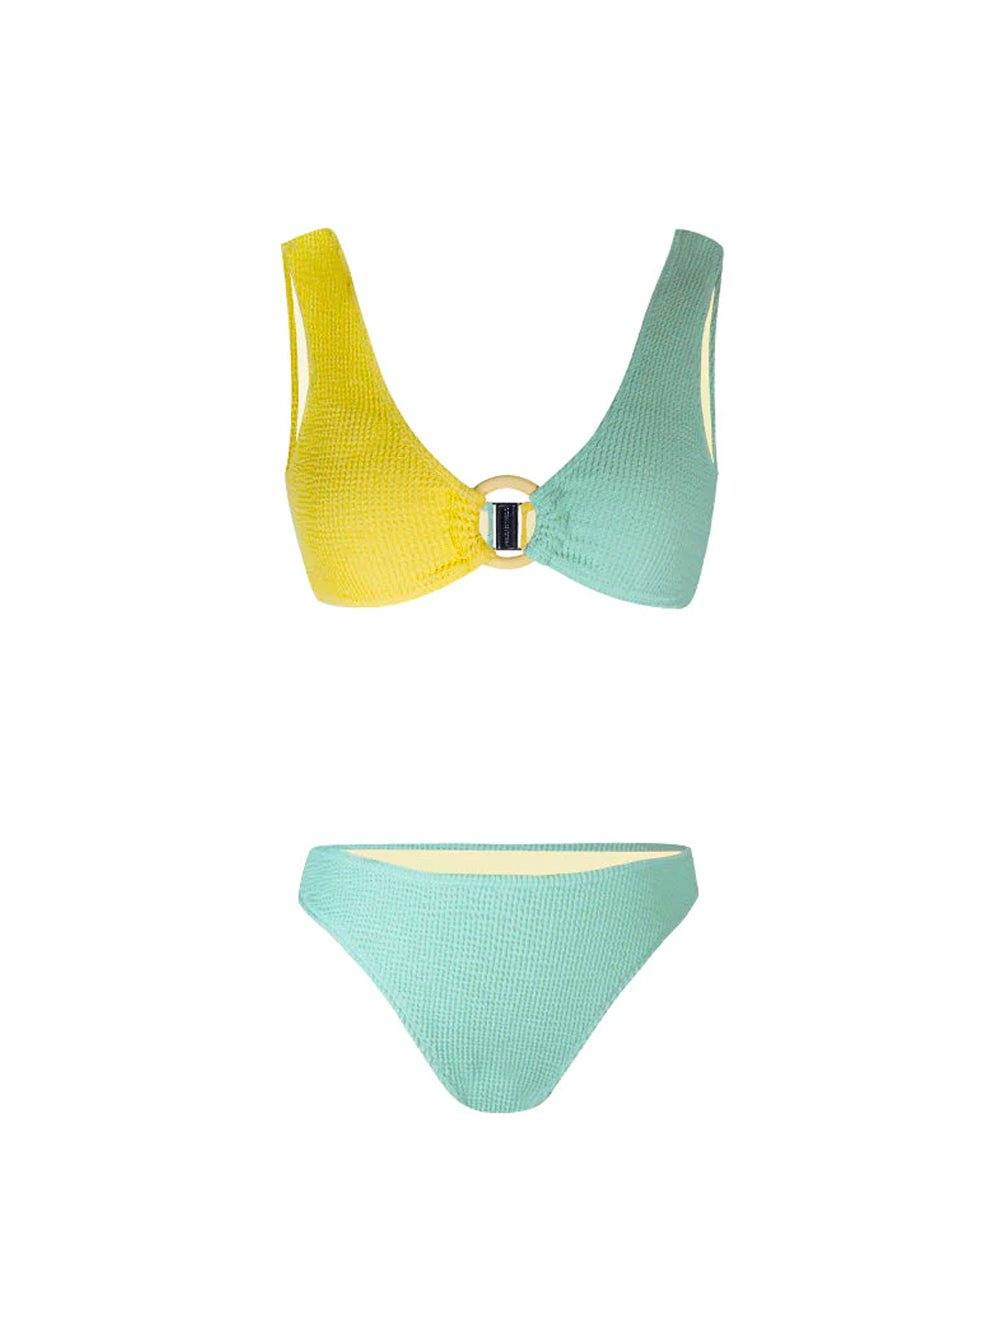 Triangle Fixed Strap Bikini - Yellow & Mint Green - OCEAN MYSTERY